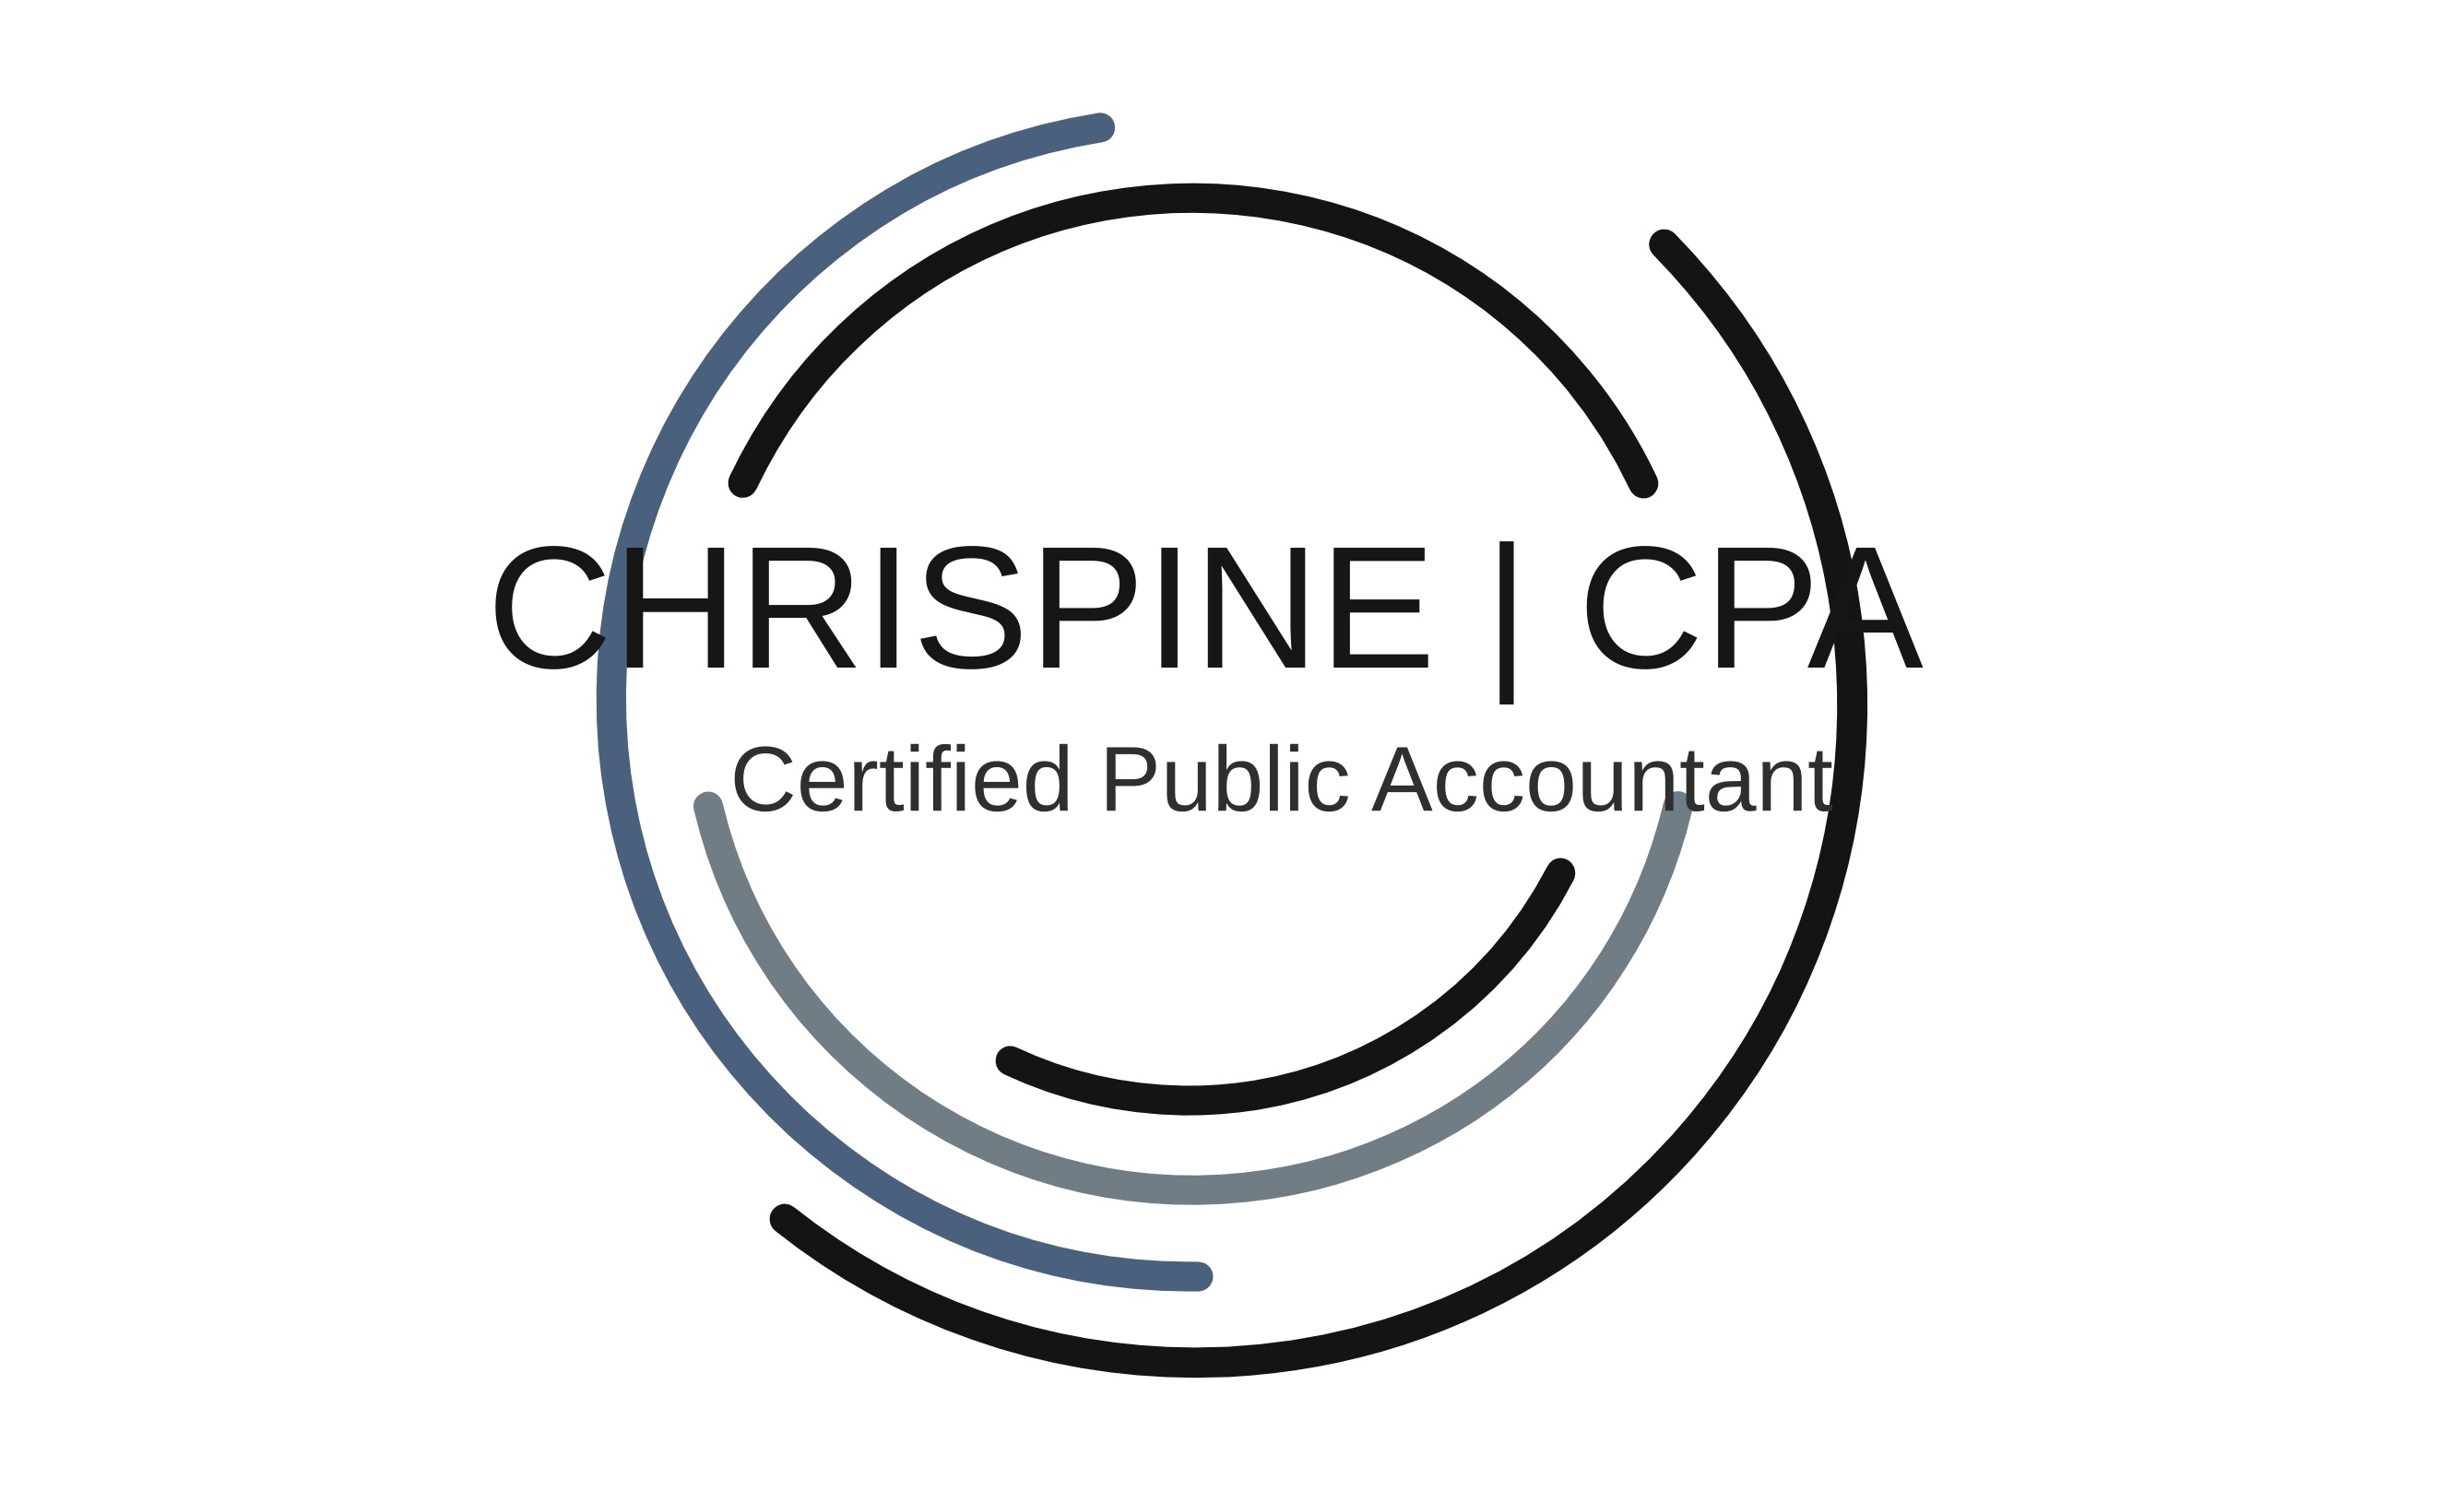 Chrispine CPA